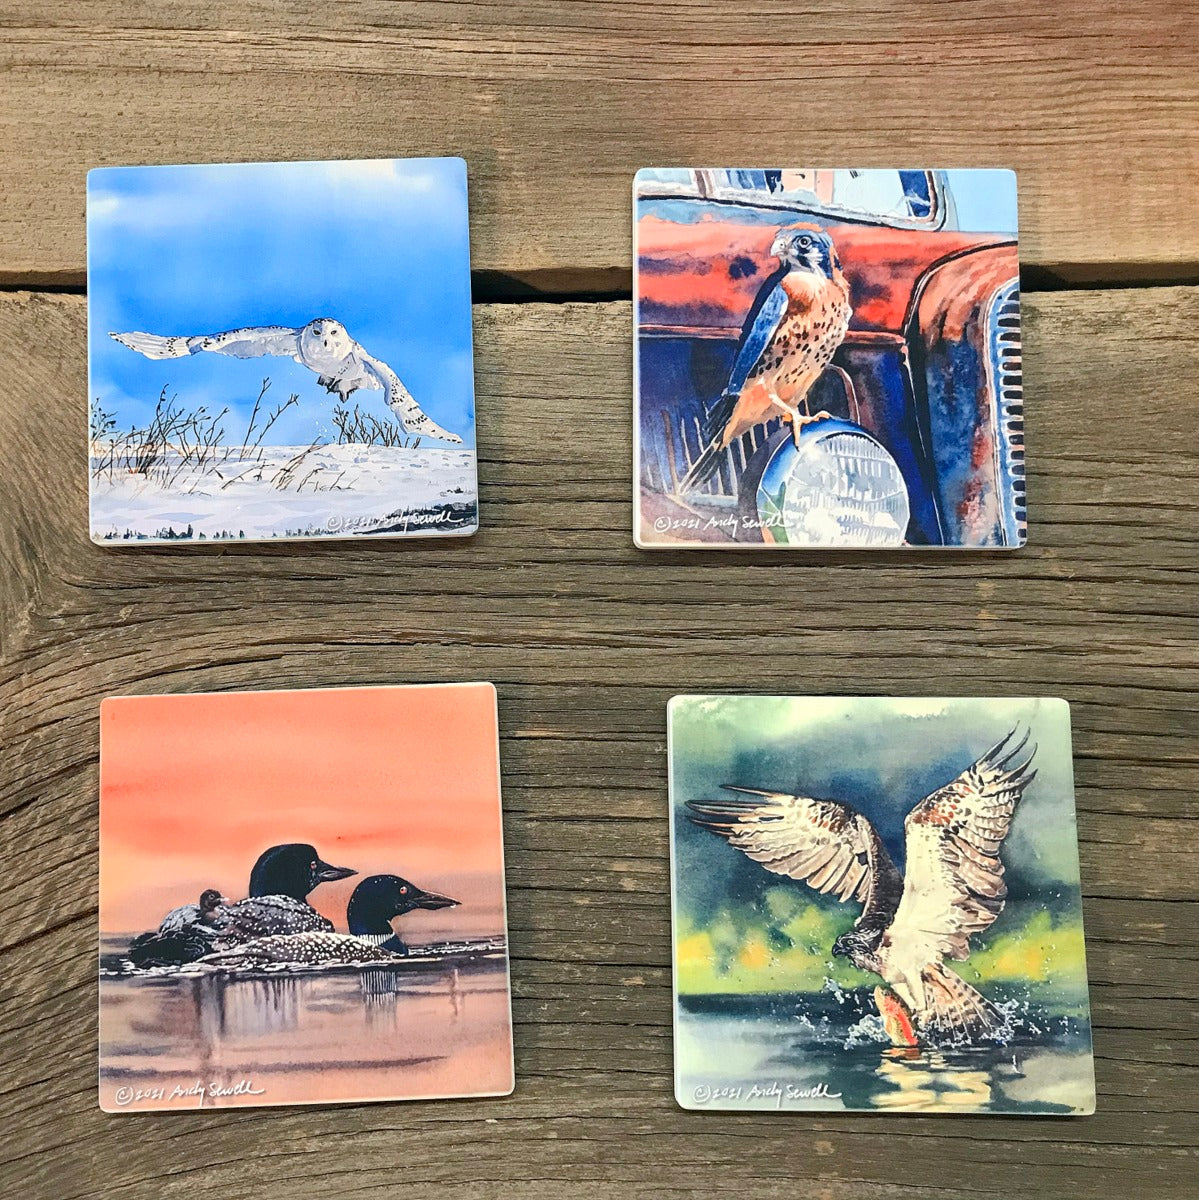 "Herons, Eagles, & More " themed coaster sets: 3 options, see below.